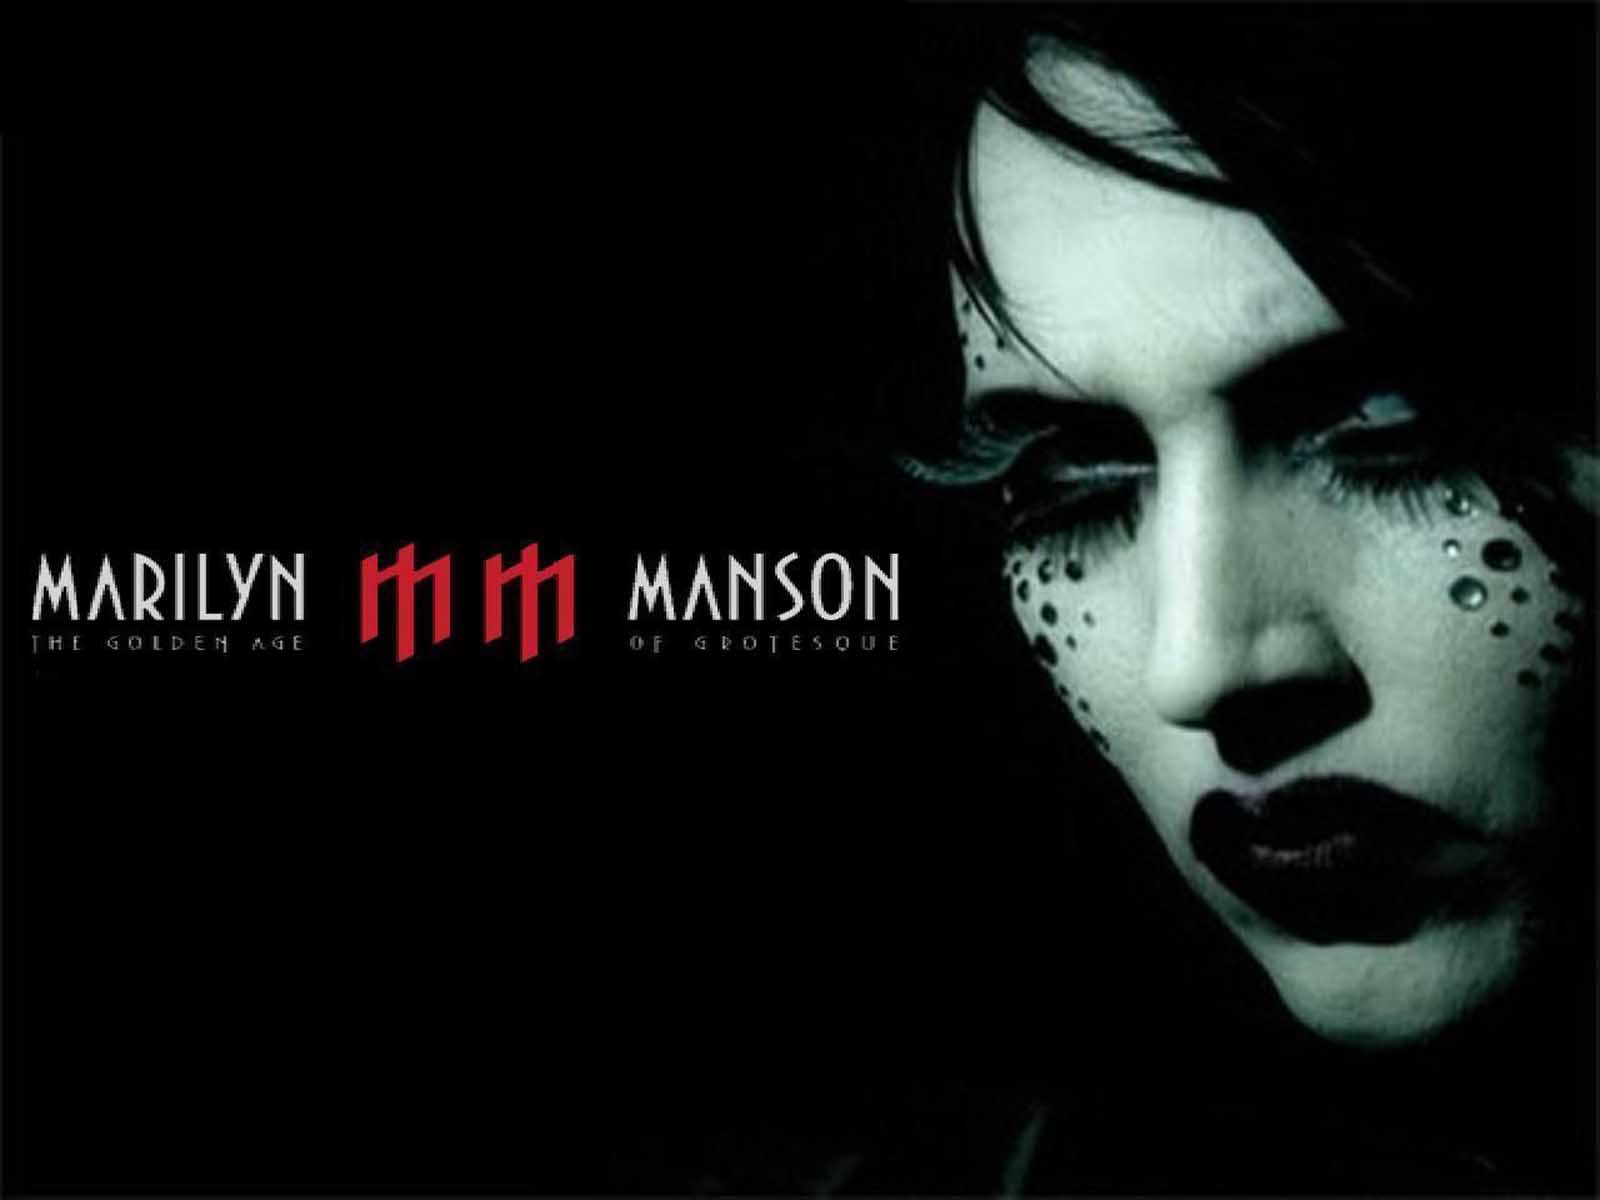 Wallpaper Marilyn Manson The Golden Age Best